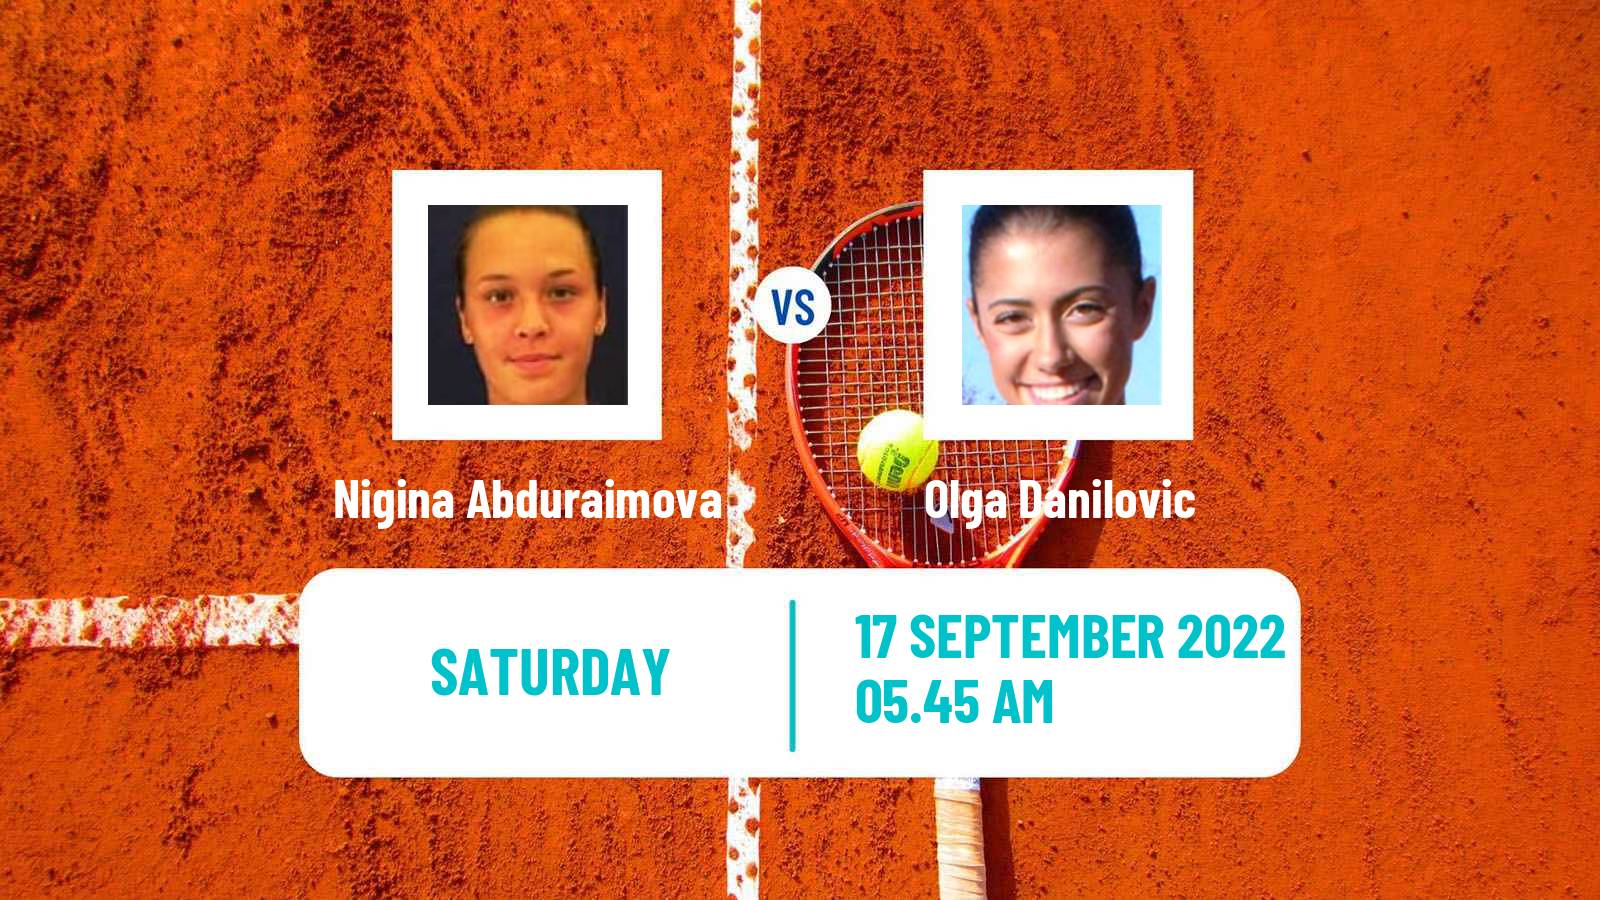 Tennis ATP Challenger Nigina Abduraimova - Olga Danilovic